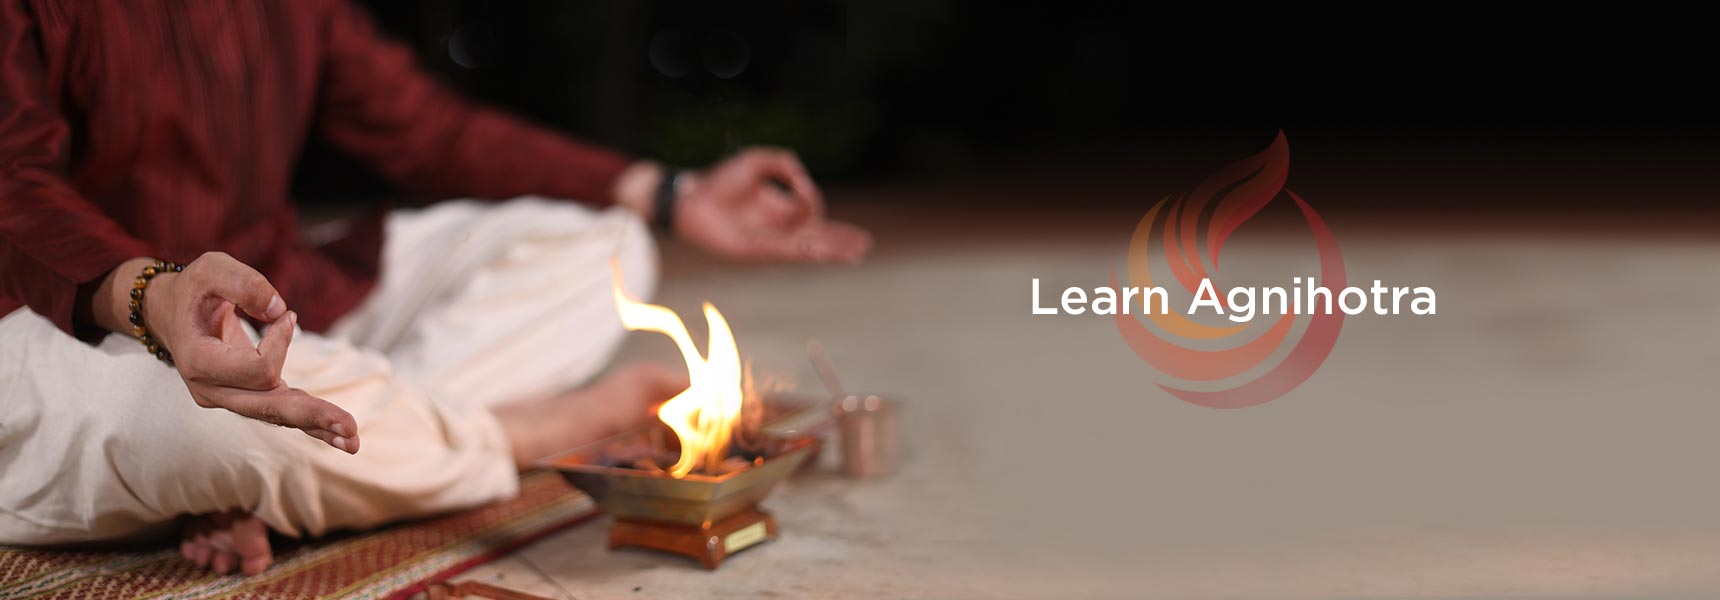 Learn Agnihotra